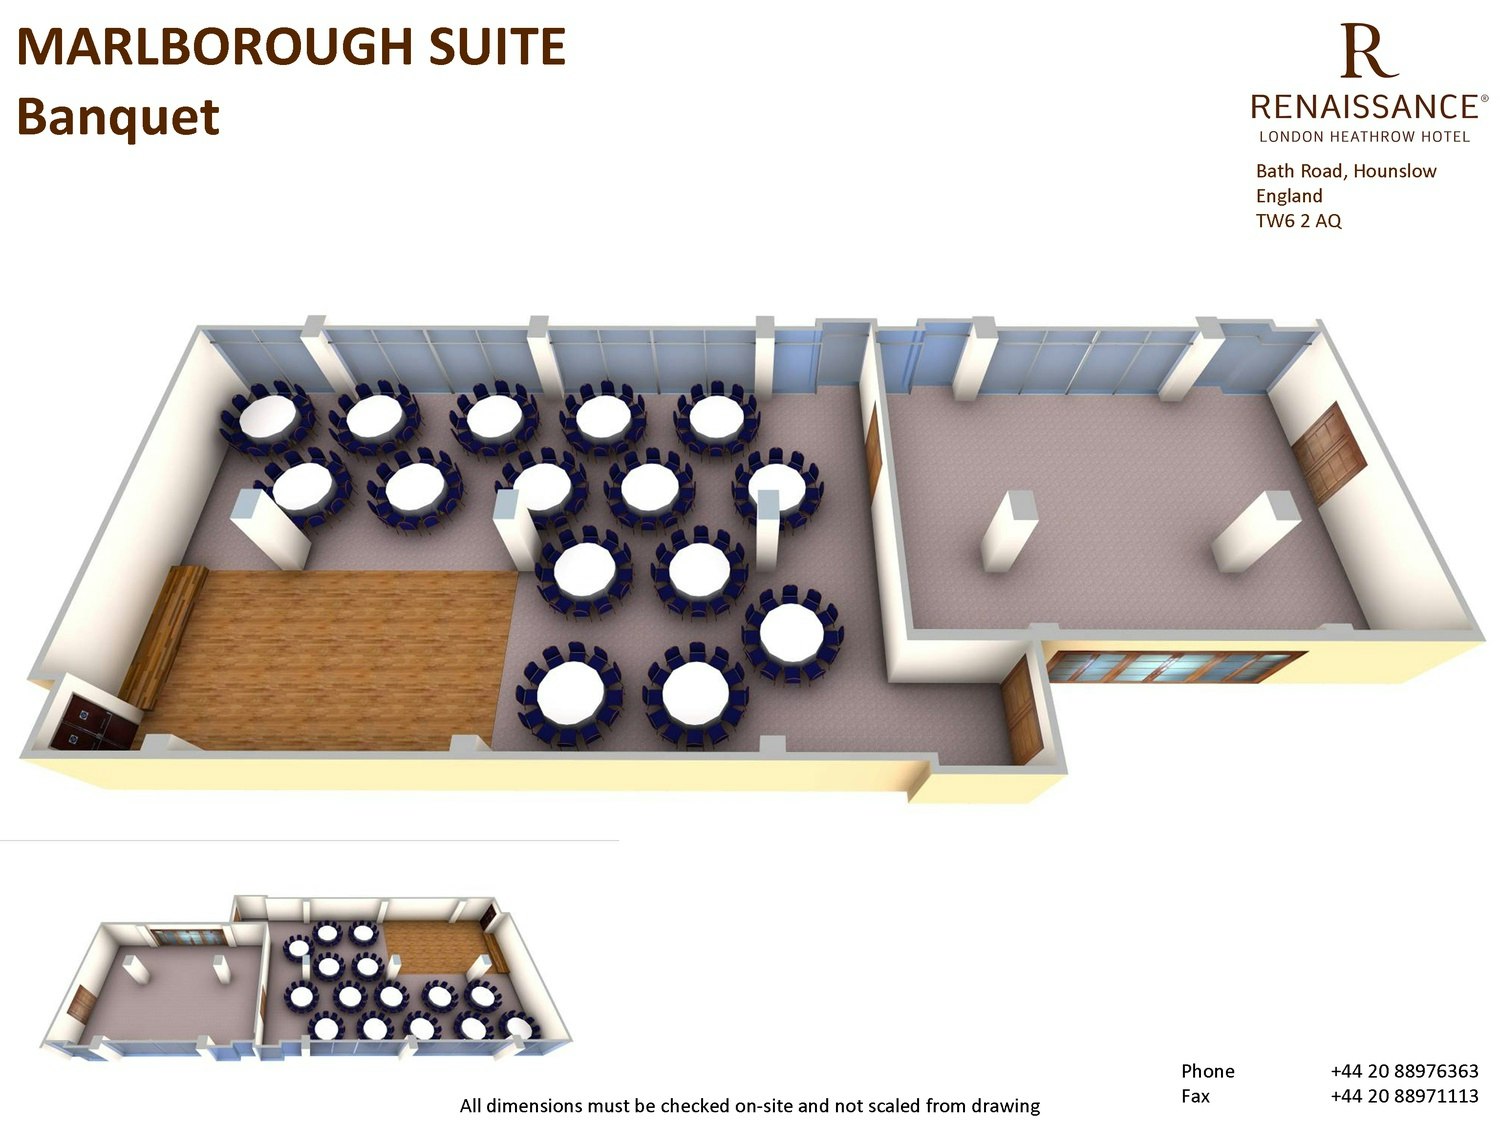 Renaissance London Heathrow Hotel - Marlborough Suite image 3